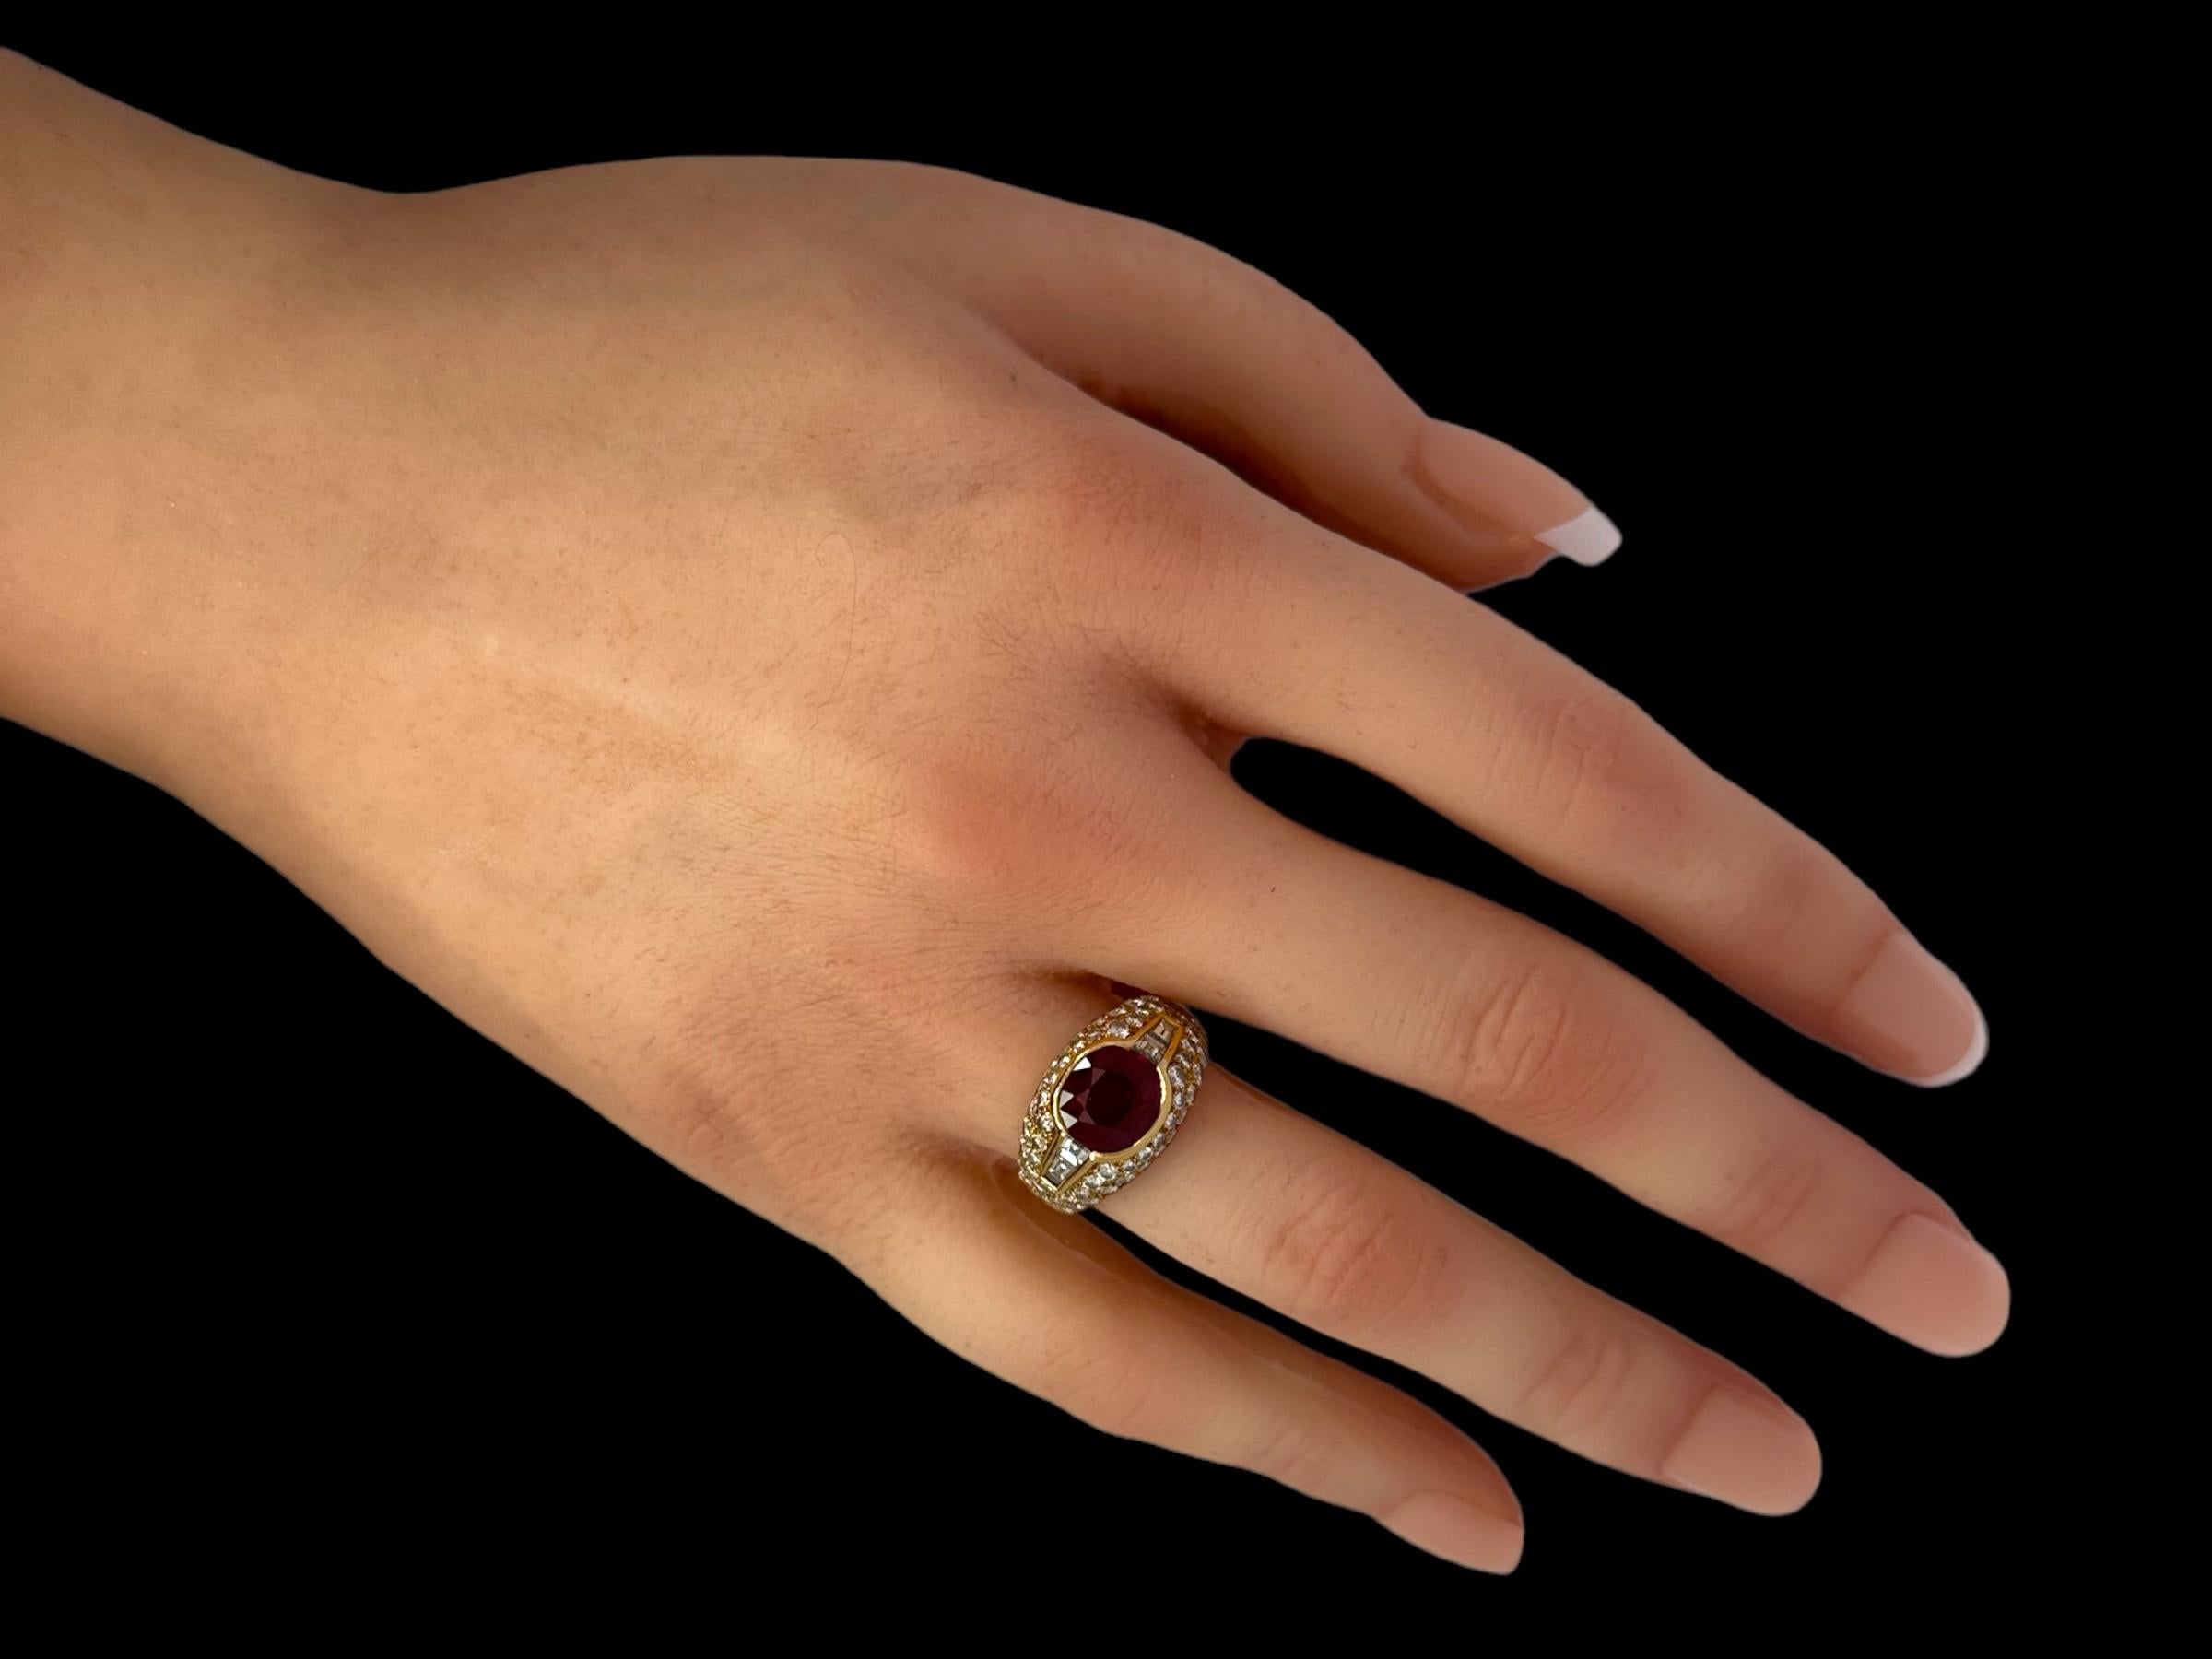 Bvlgari Trombino 18kt Yellow Gold Ring 2.09ct Ruby & Diamonds With GRS Cert For Sale 8